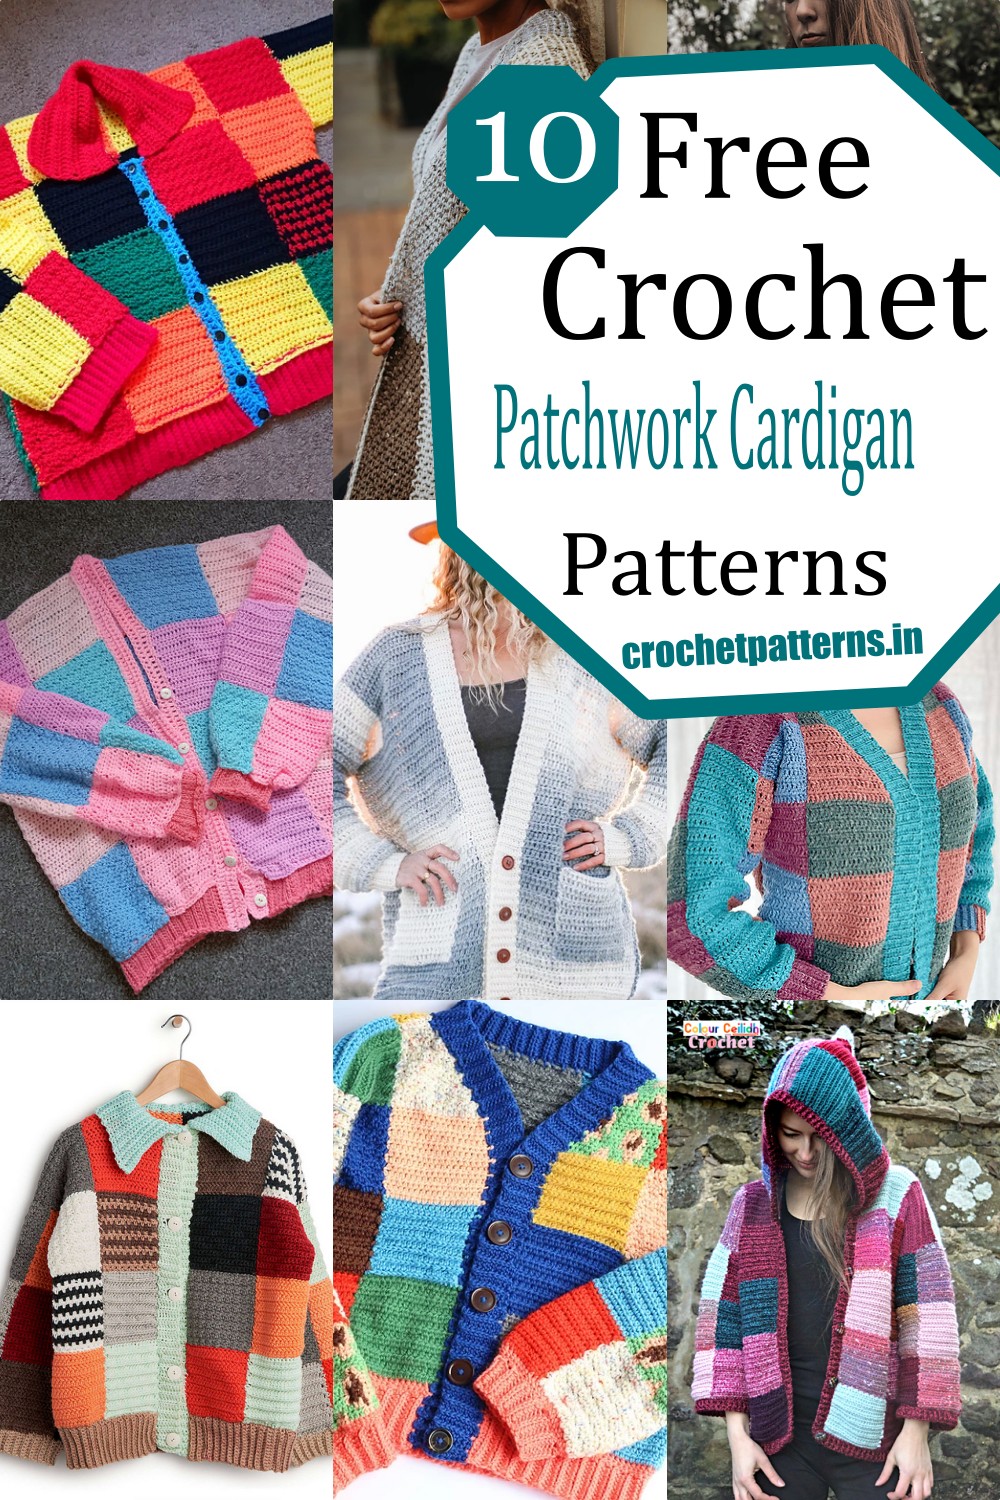 12 Crochet Patchwork Cardigan Patterns